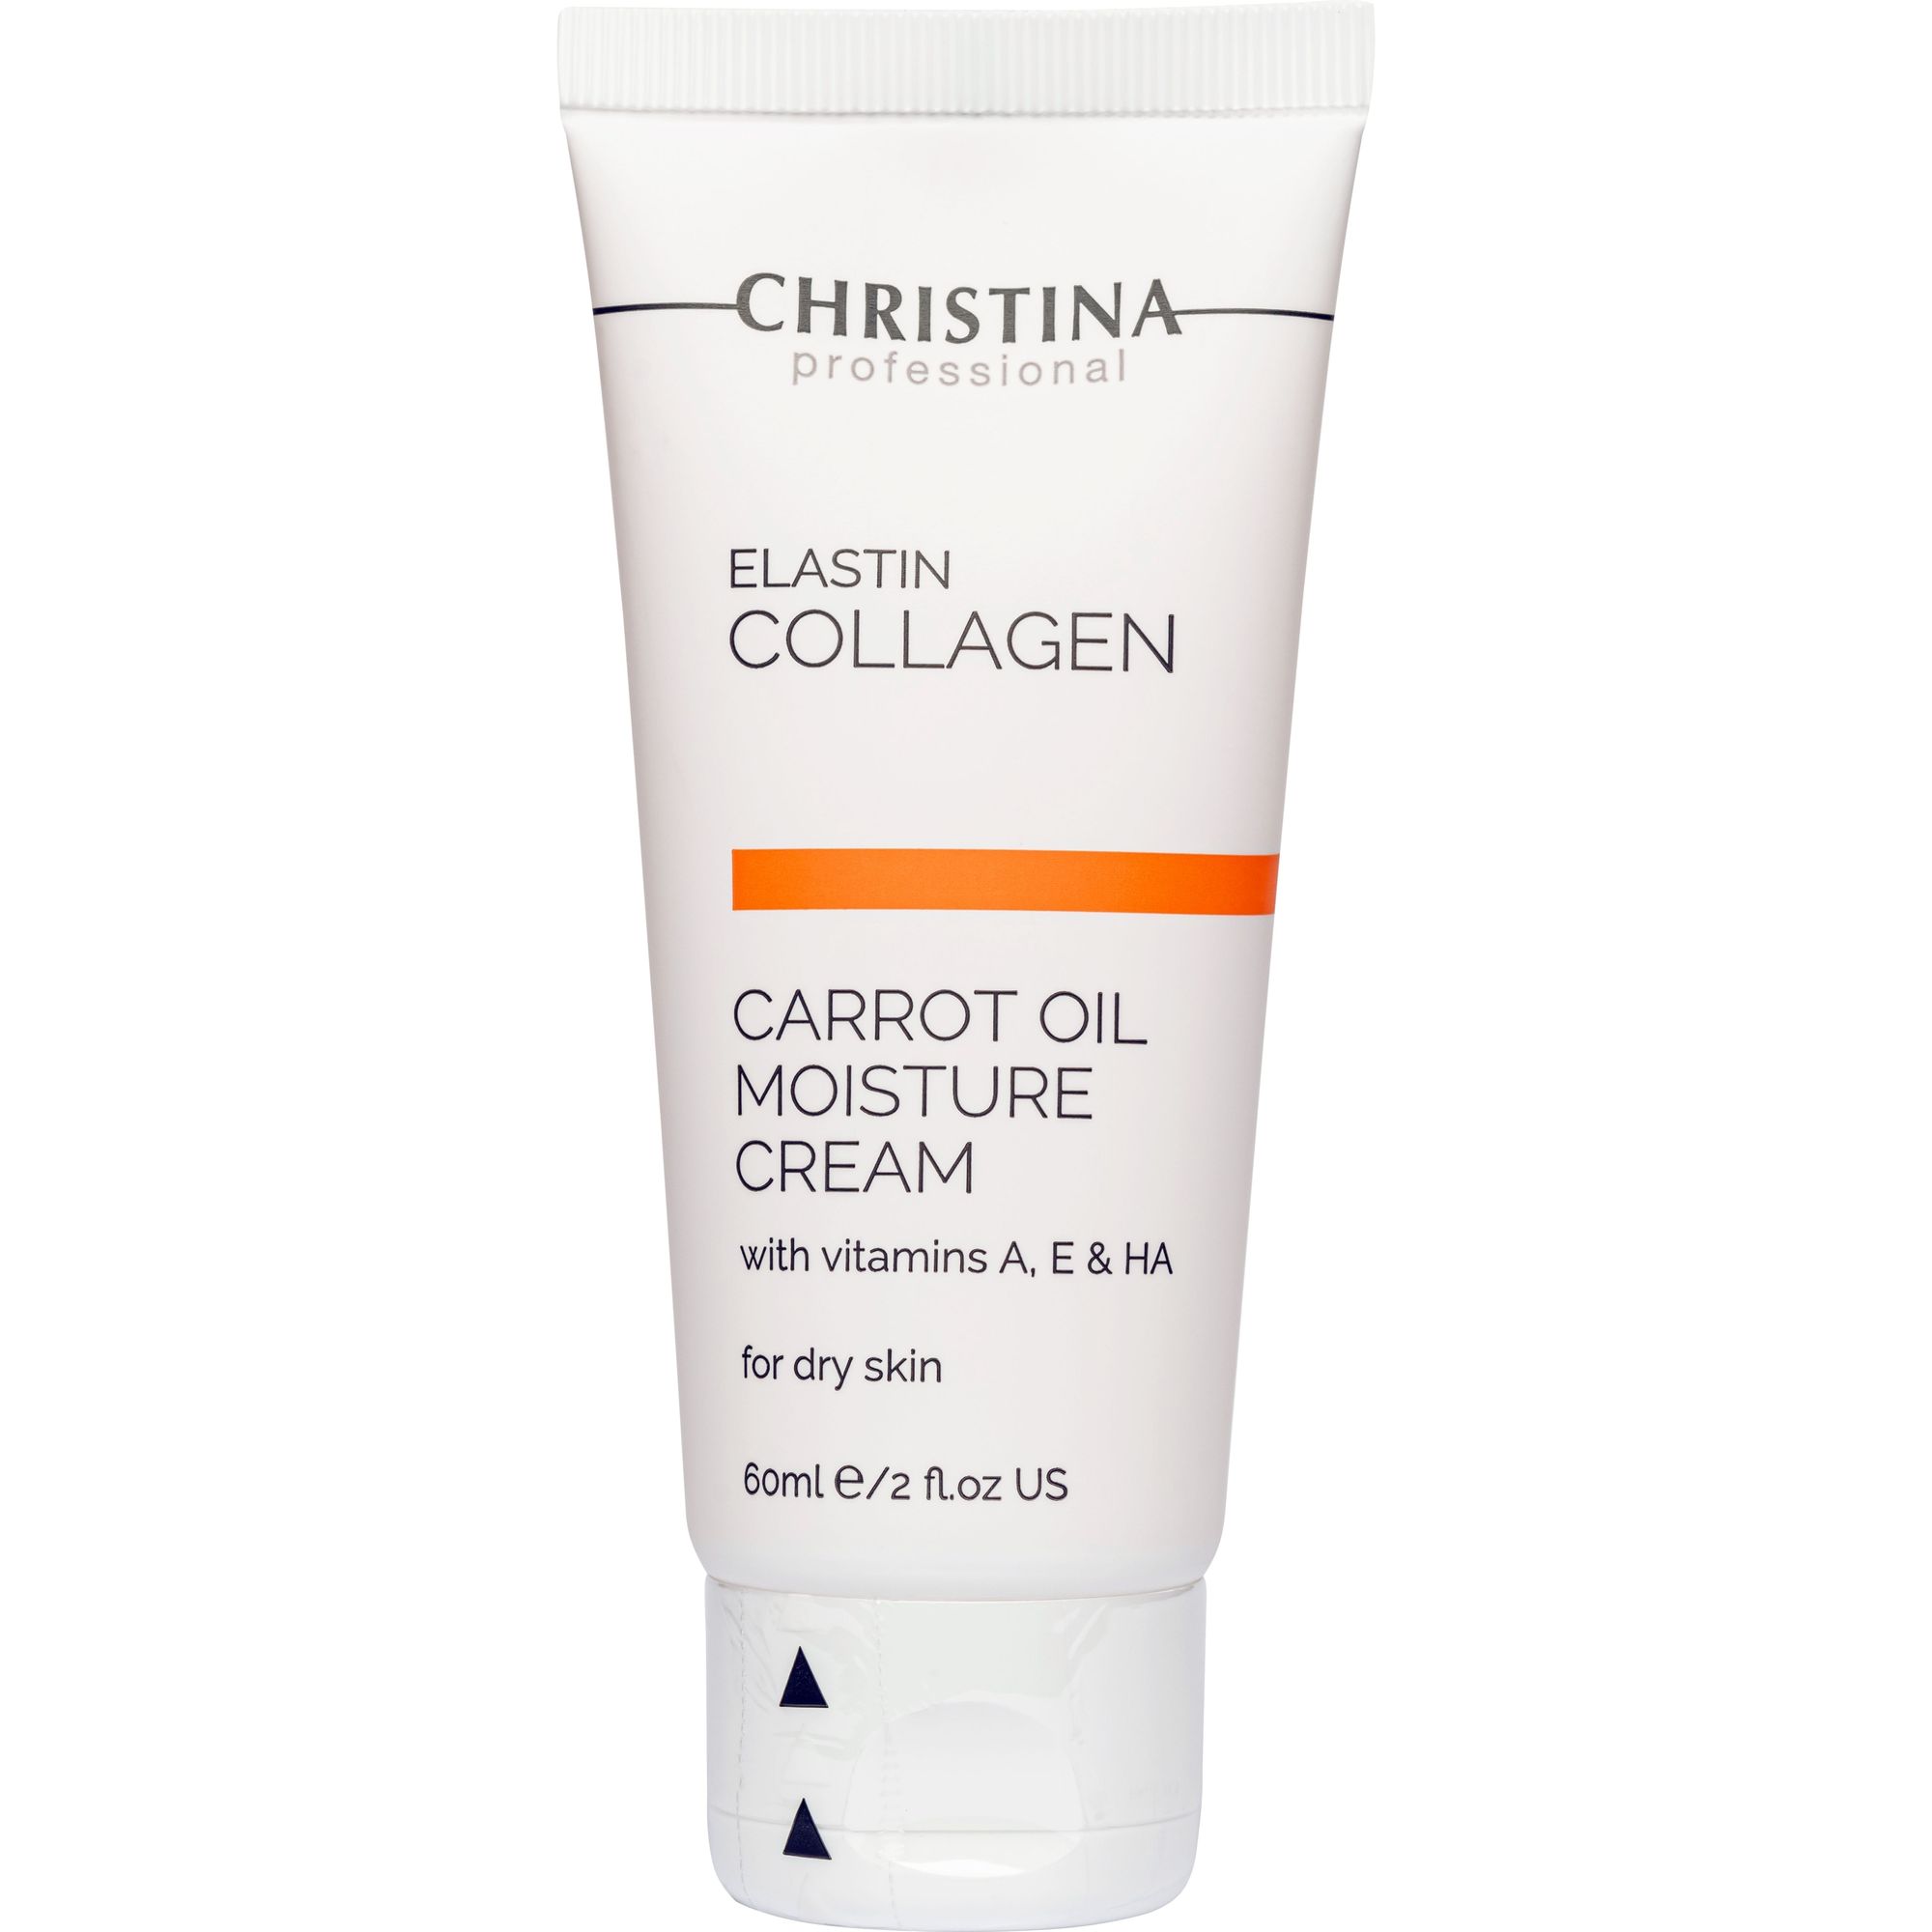 Зволожувальний крем для сухої шкіри Christina Elastin Collagen Carrot Oil Moisture Cream With Vitamins A, E & HA 60 мл - фото 1